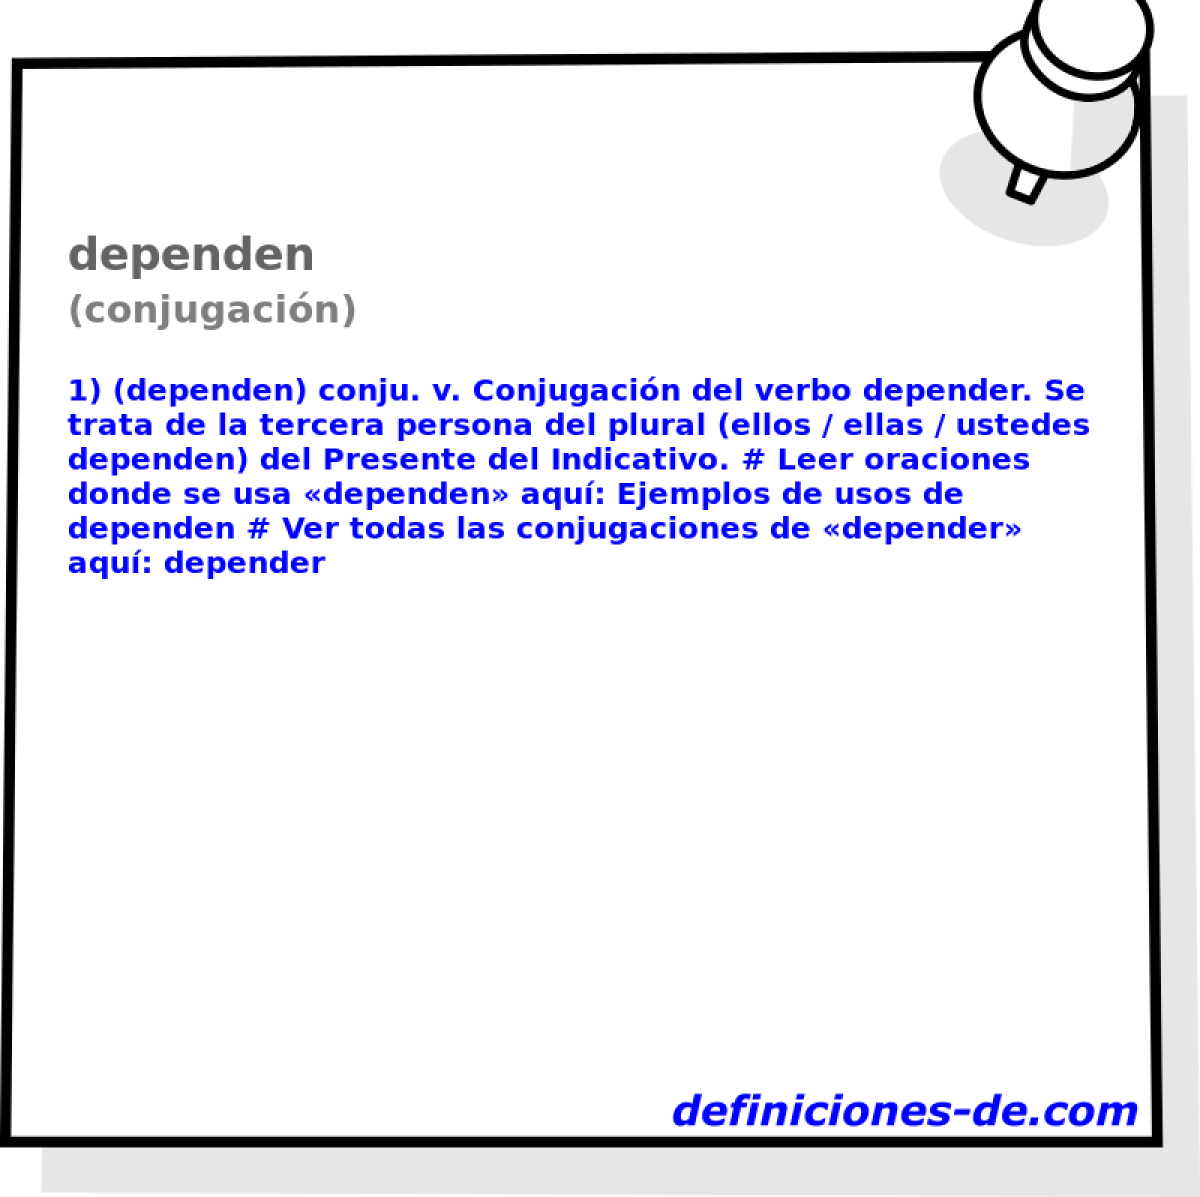 dependen (conjugacin)